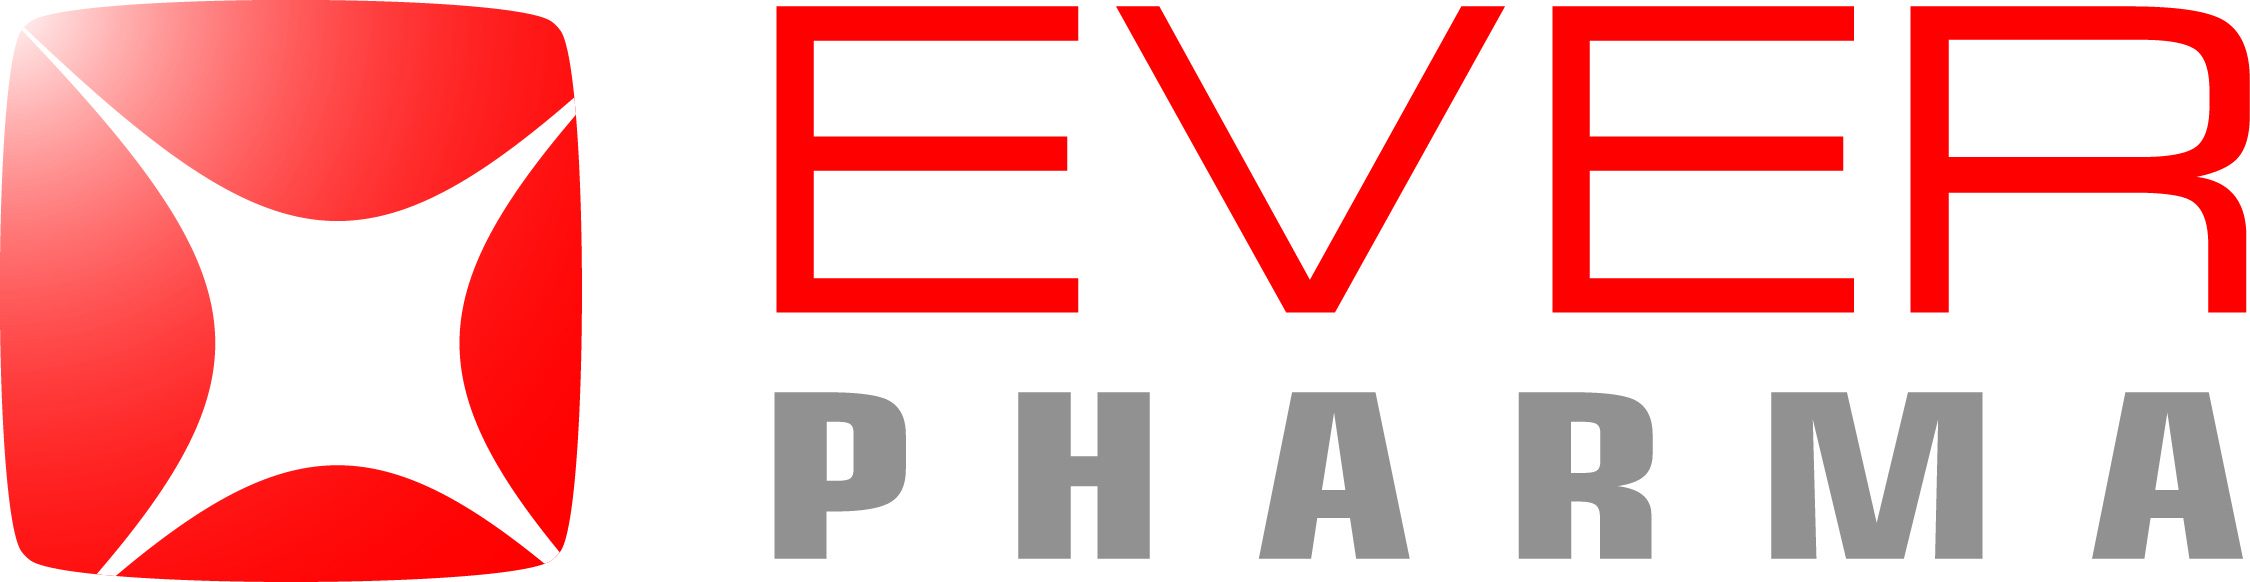 EVER_PHARMA Logo